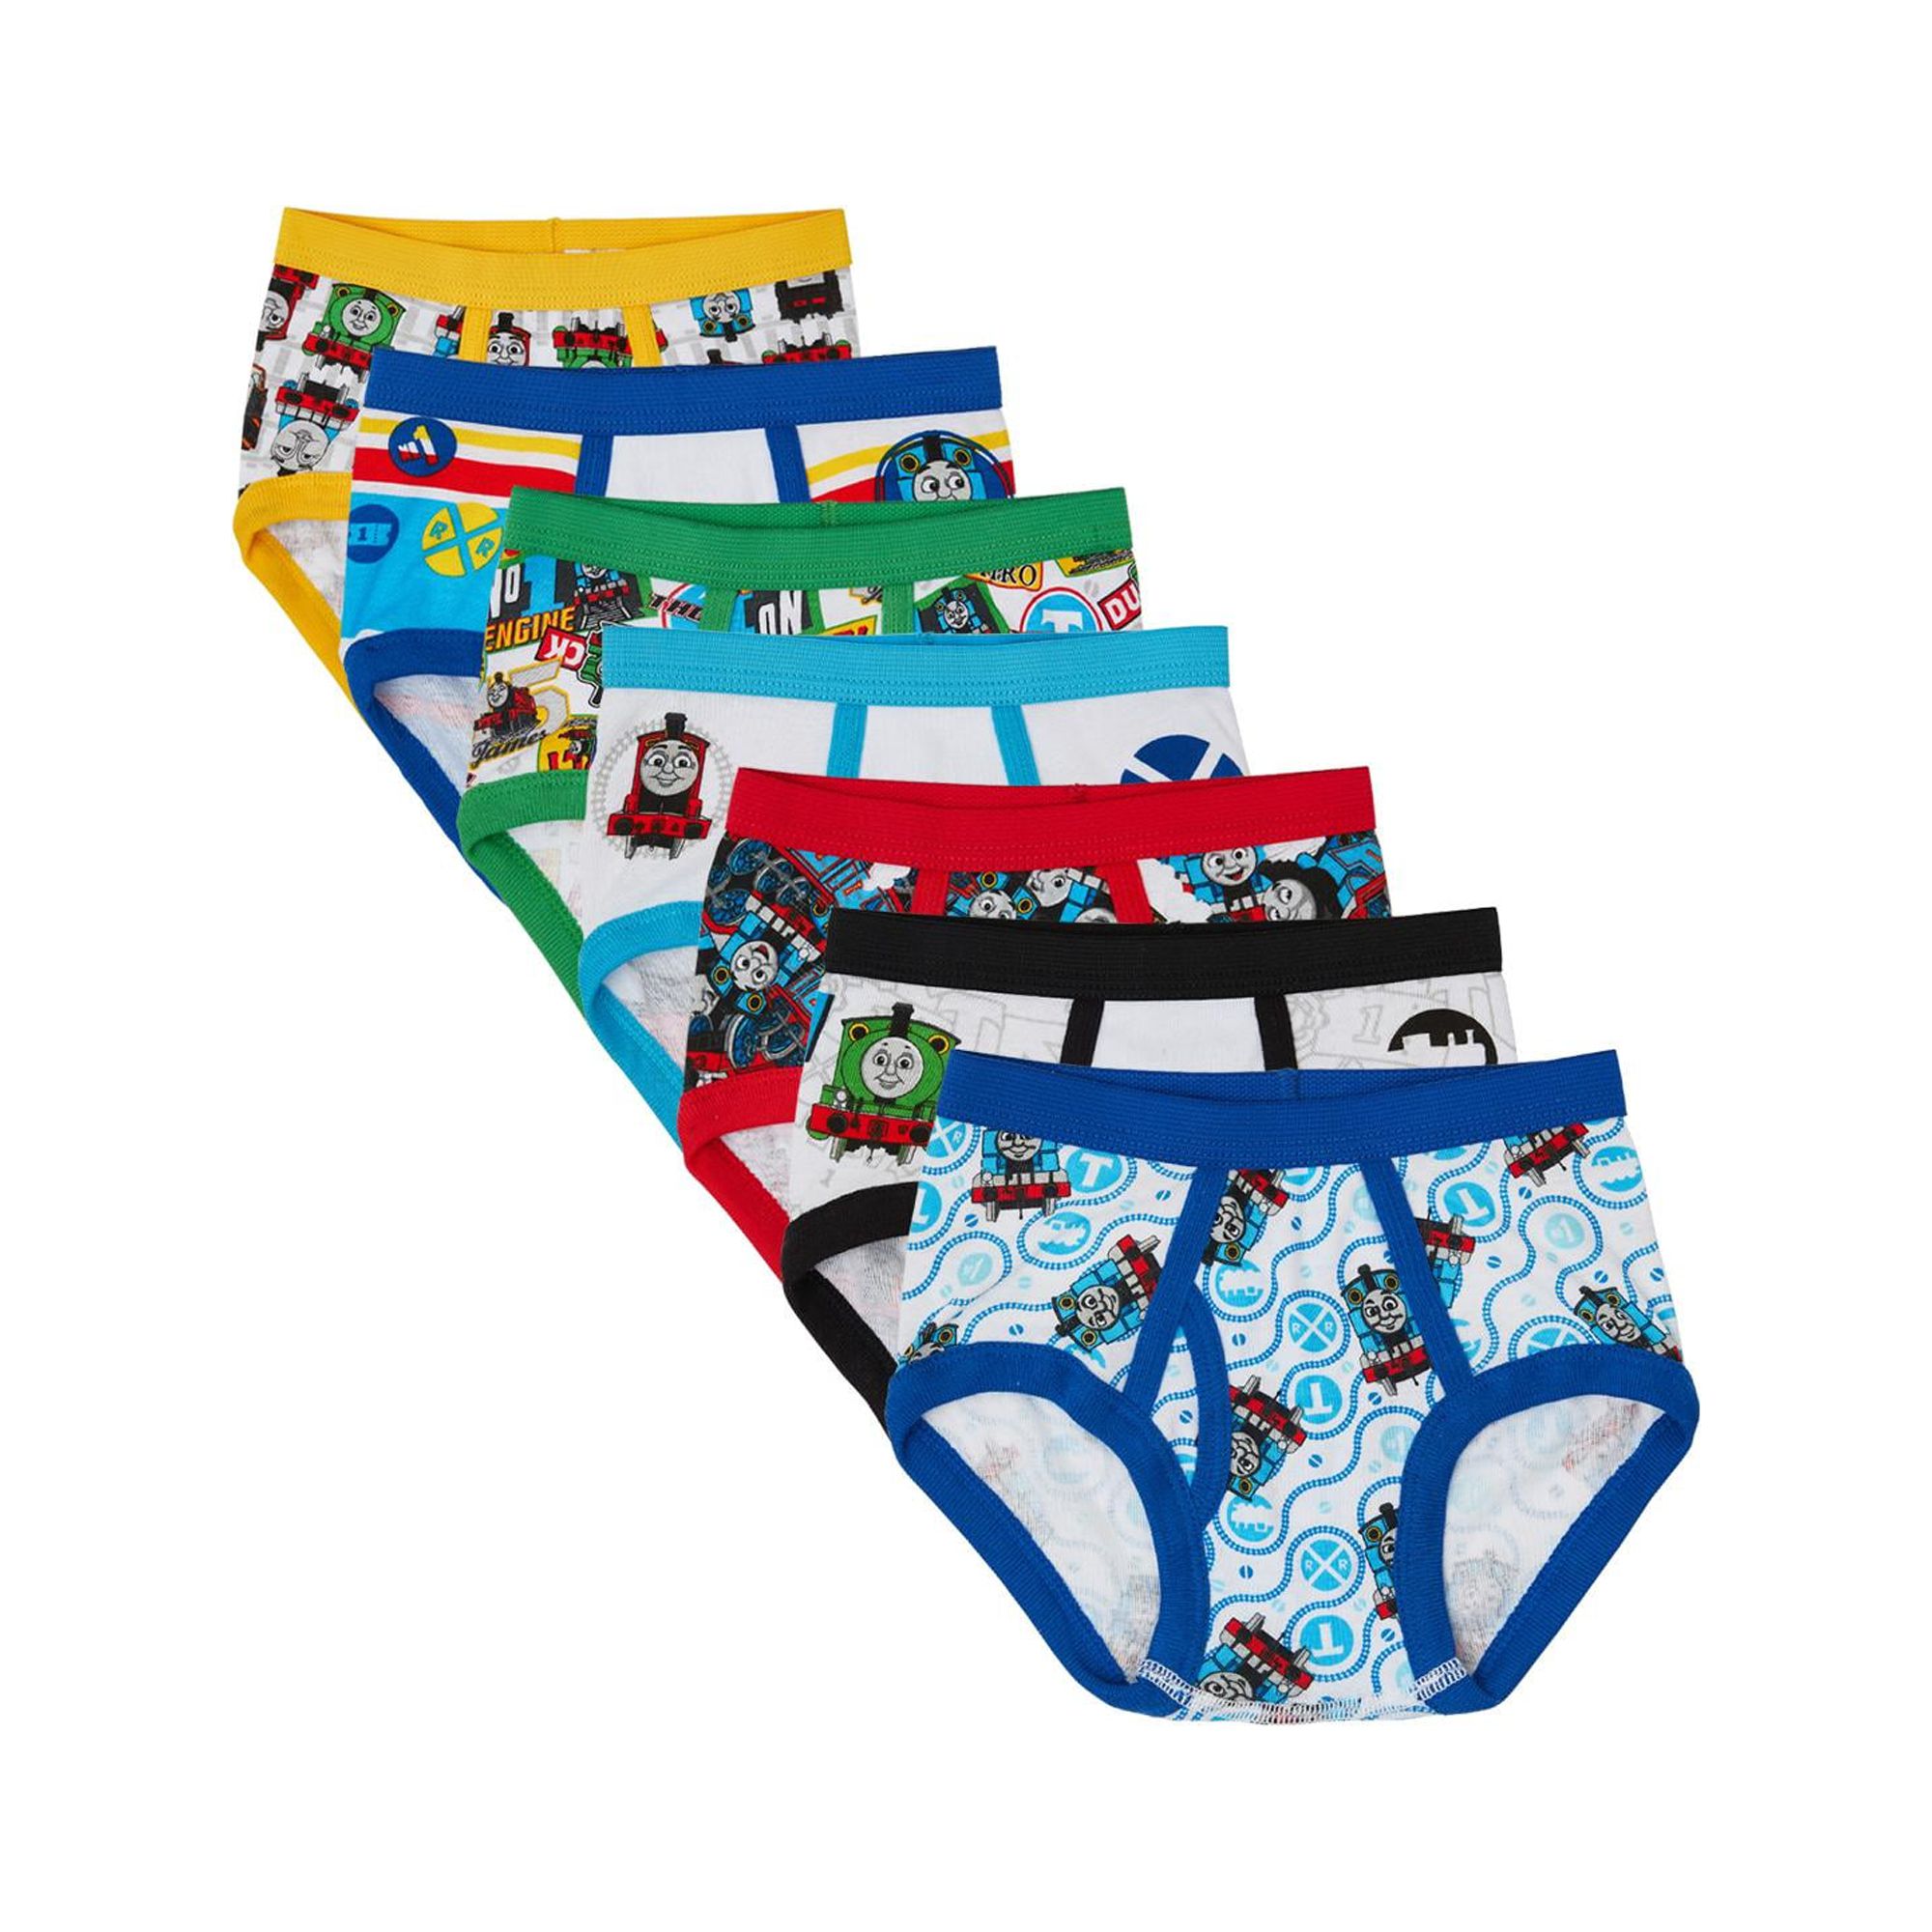 Toddler Boys' Thomas Underwear, 7-Pack - image 1 of 3